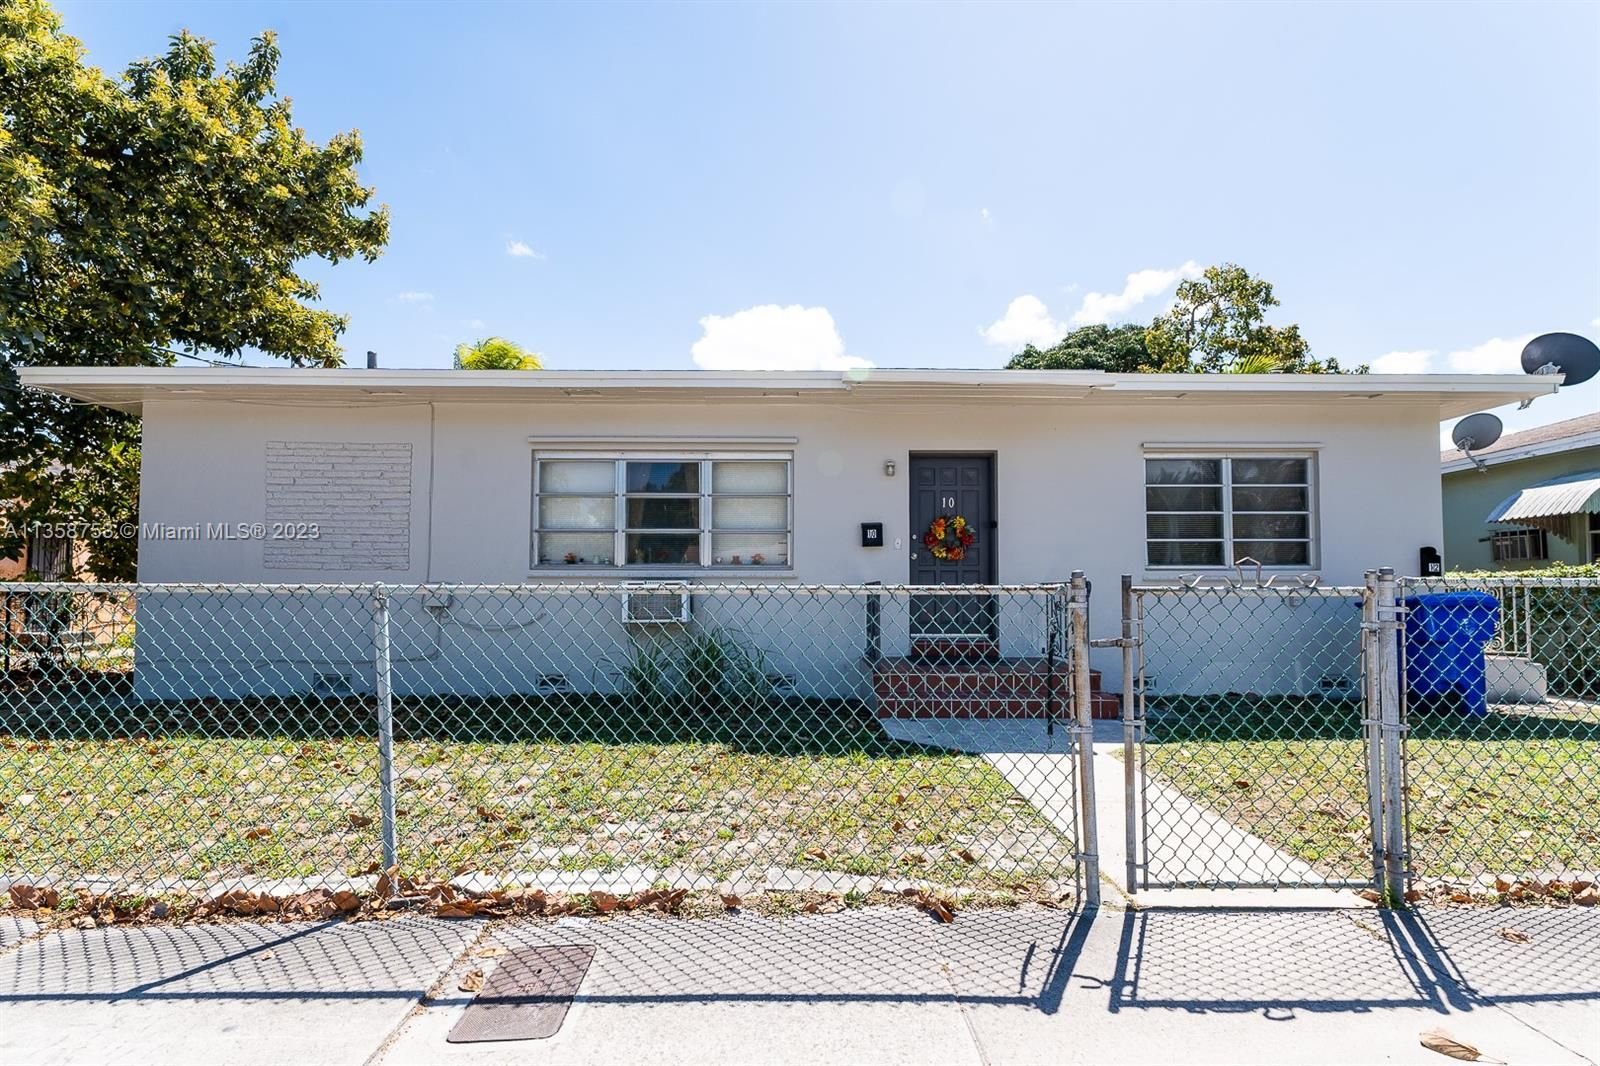 Real estate property located at 10 68th Ter, Miami-Dade County, Miami, FL